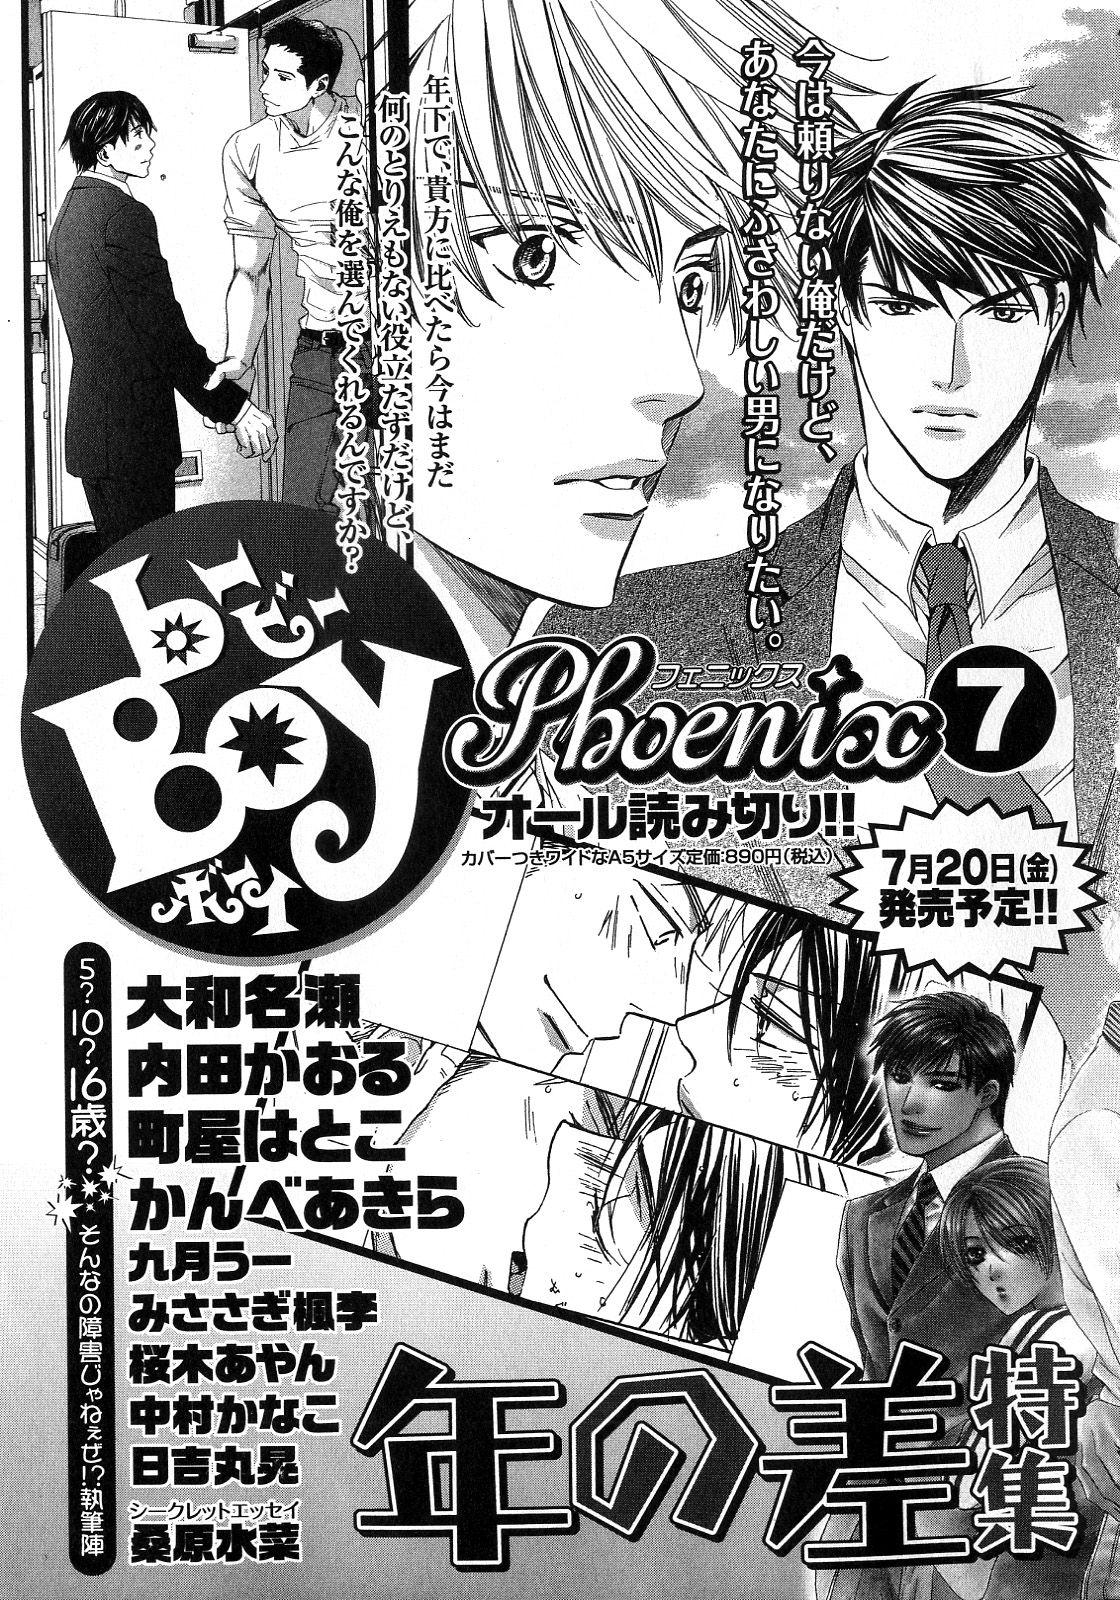 b-BOY Phoenix Vol.6 Gijinka Tokushuu 285